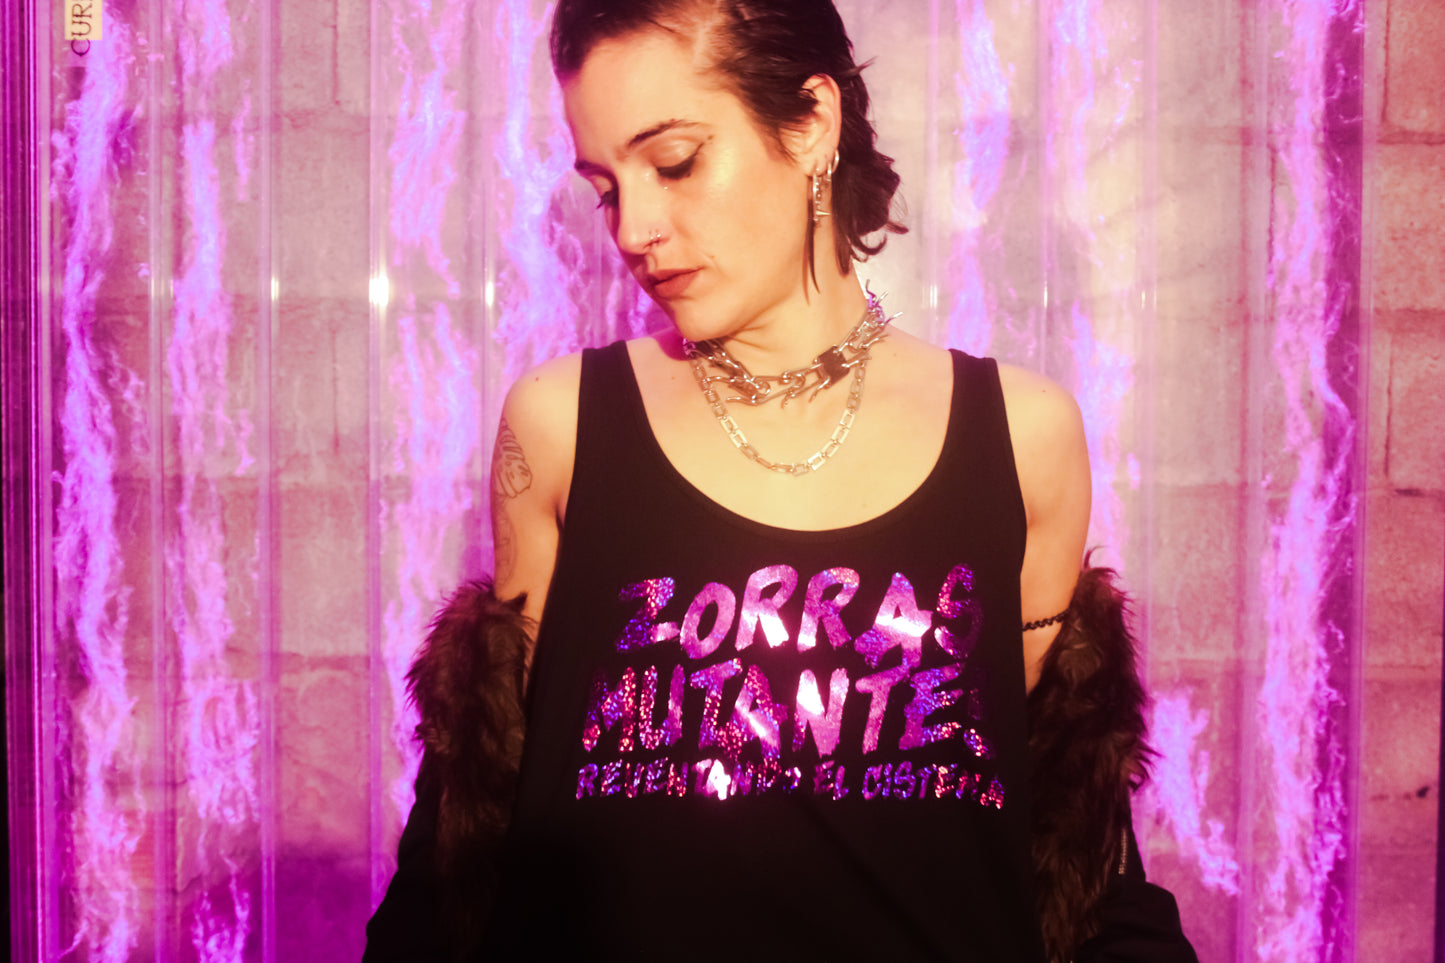 Camiseta tirantes negra ecológica ropa feminista algodón orgánico comercio justo donnaharaway vnsmatrix cyborg